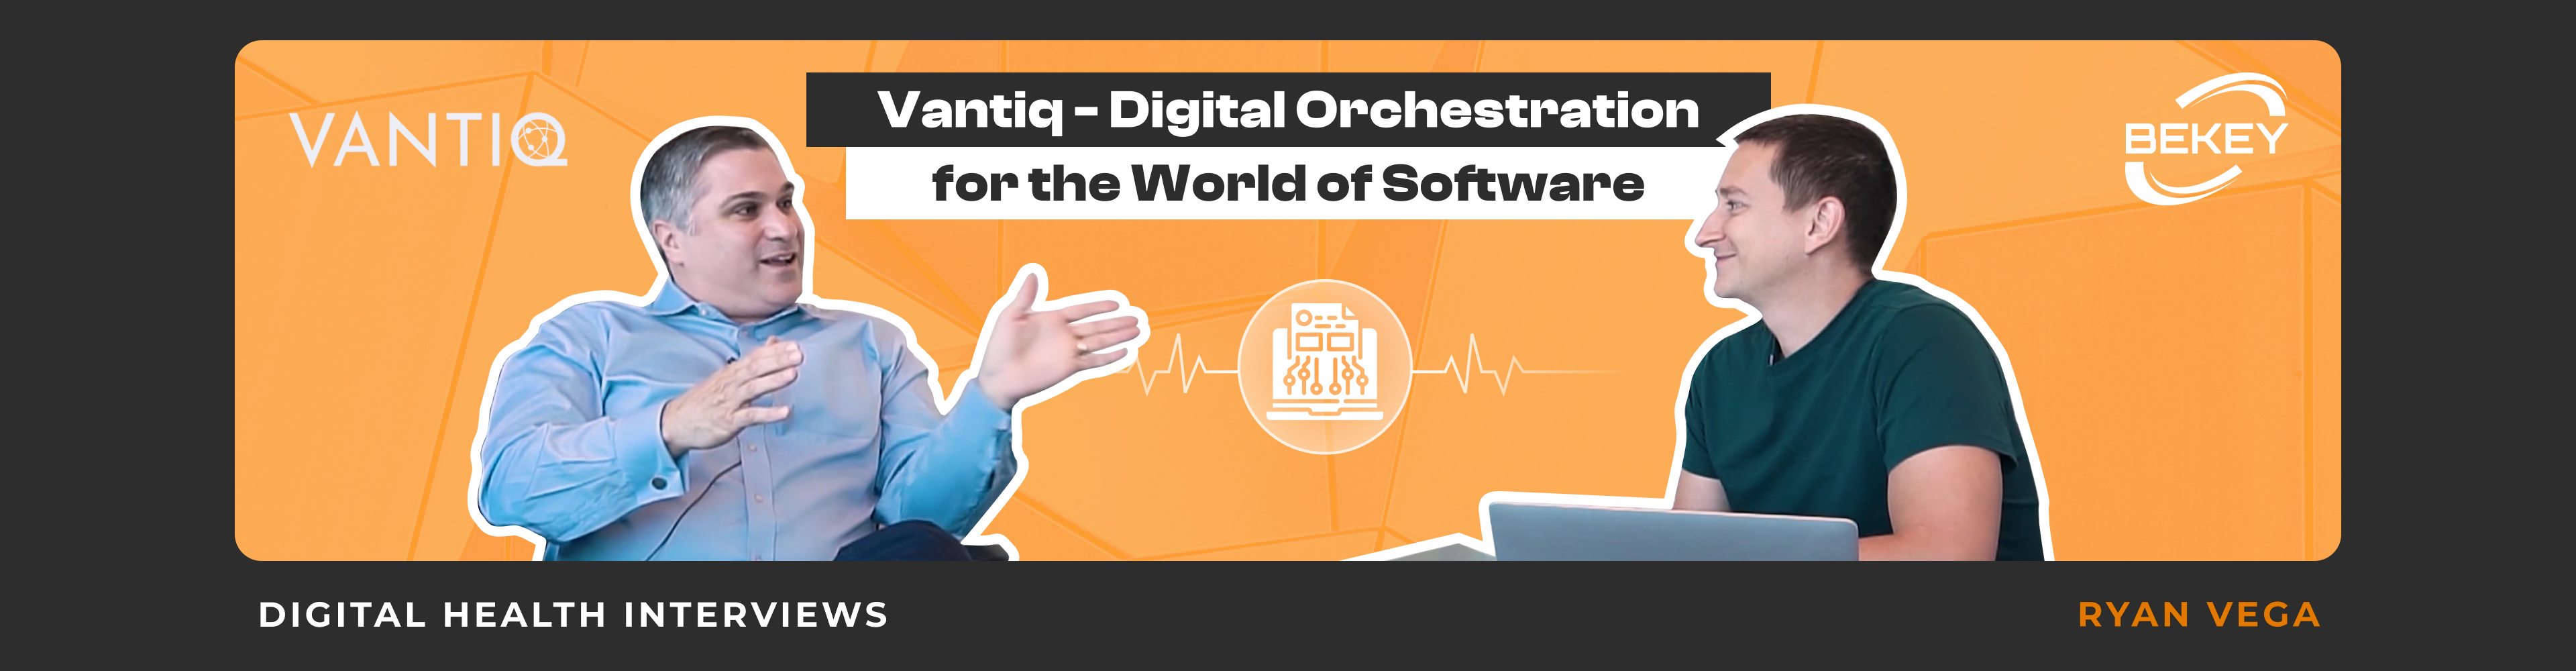 Vantiq — Digital Orchestration for the World of Software. Digital Health Interviews: Ryan Vega - image